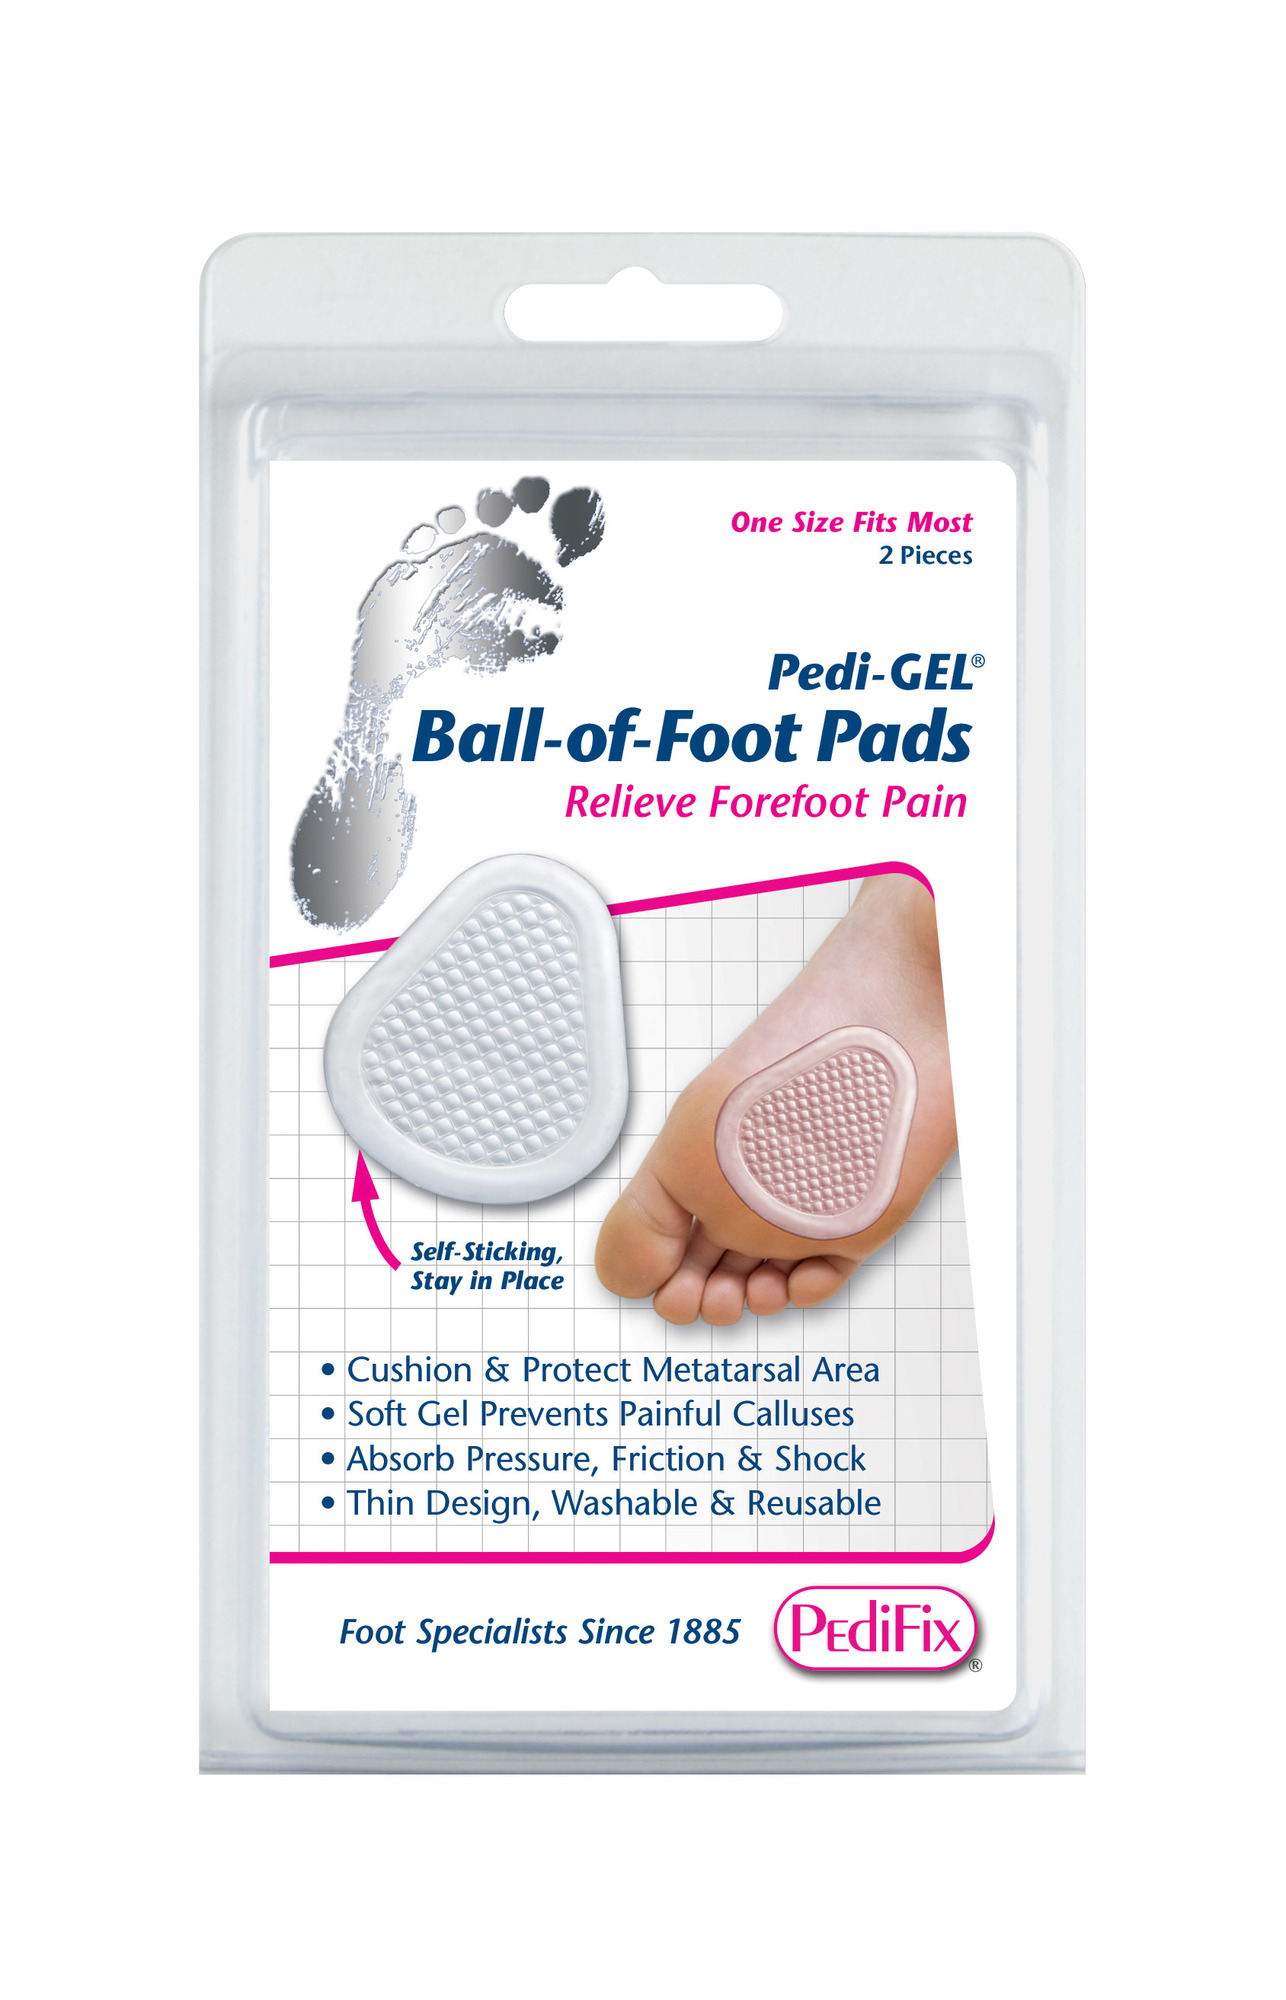 Pedifix Pedi-GEL Ball-of-Foot Pads 